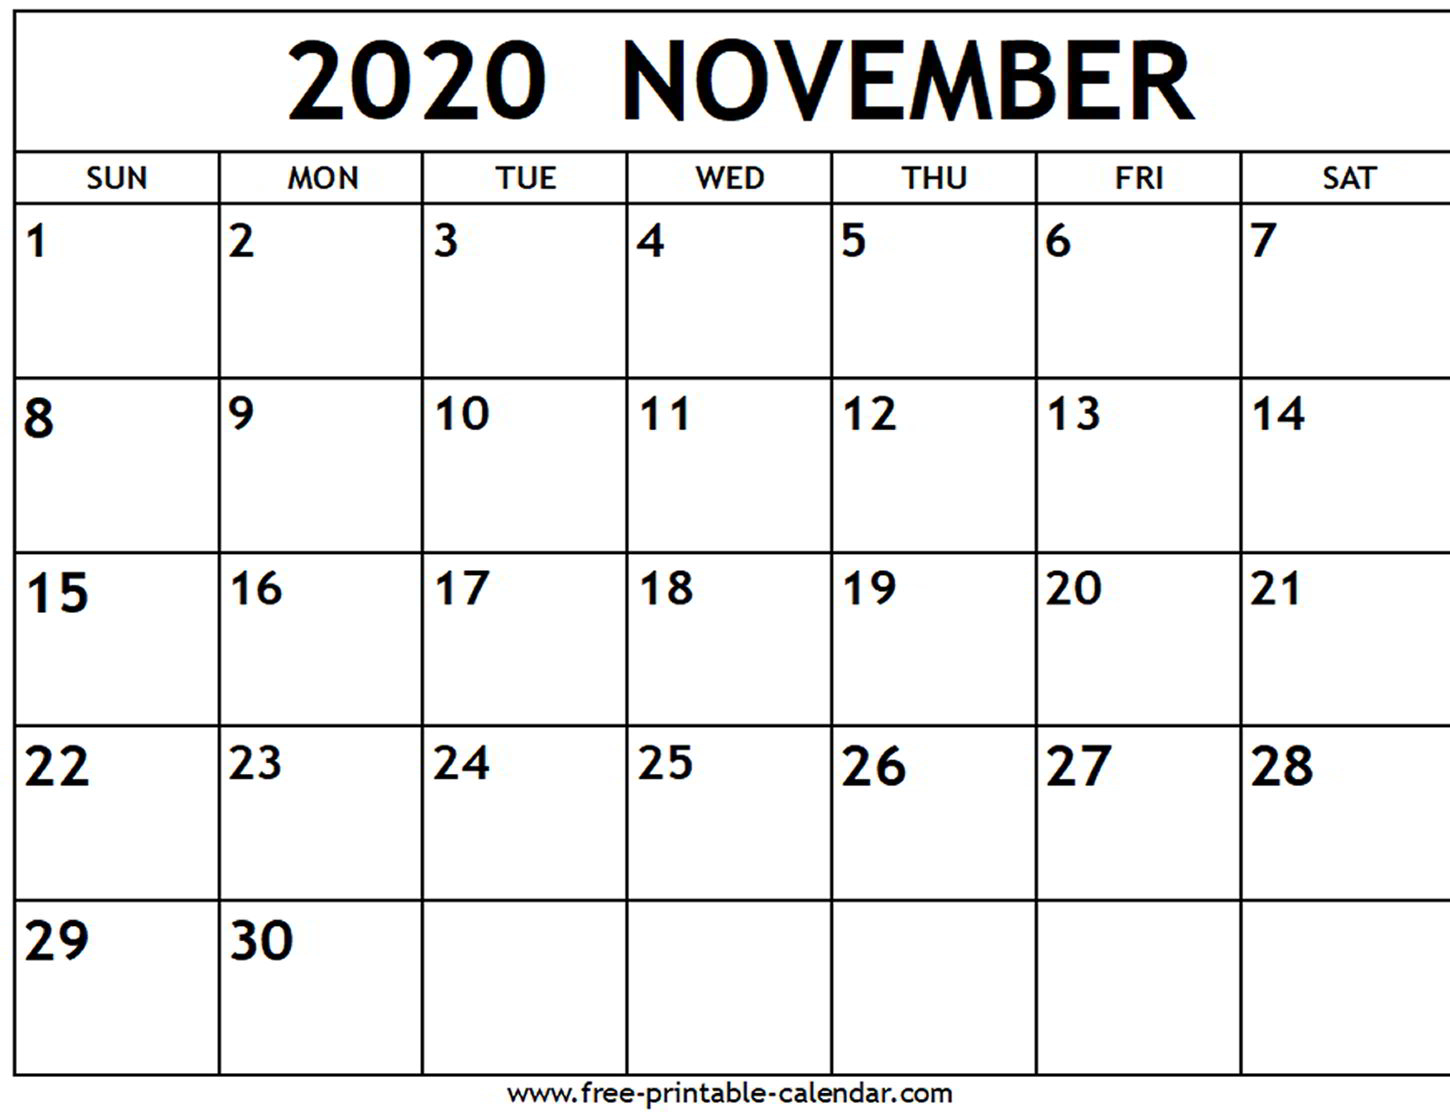 Print Calendar November 2020 - Wpa.wpart.co